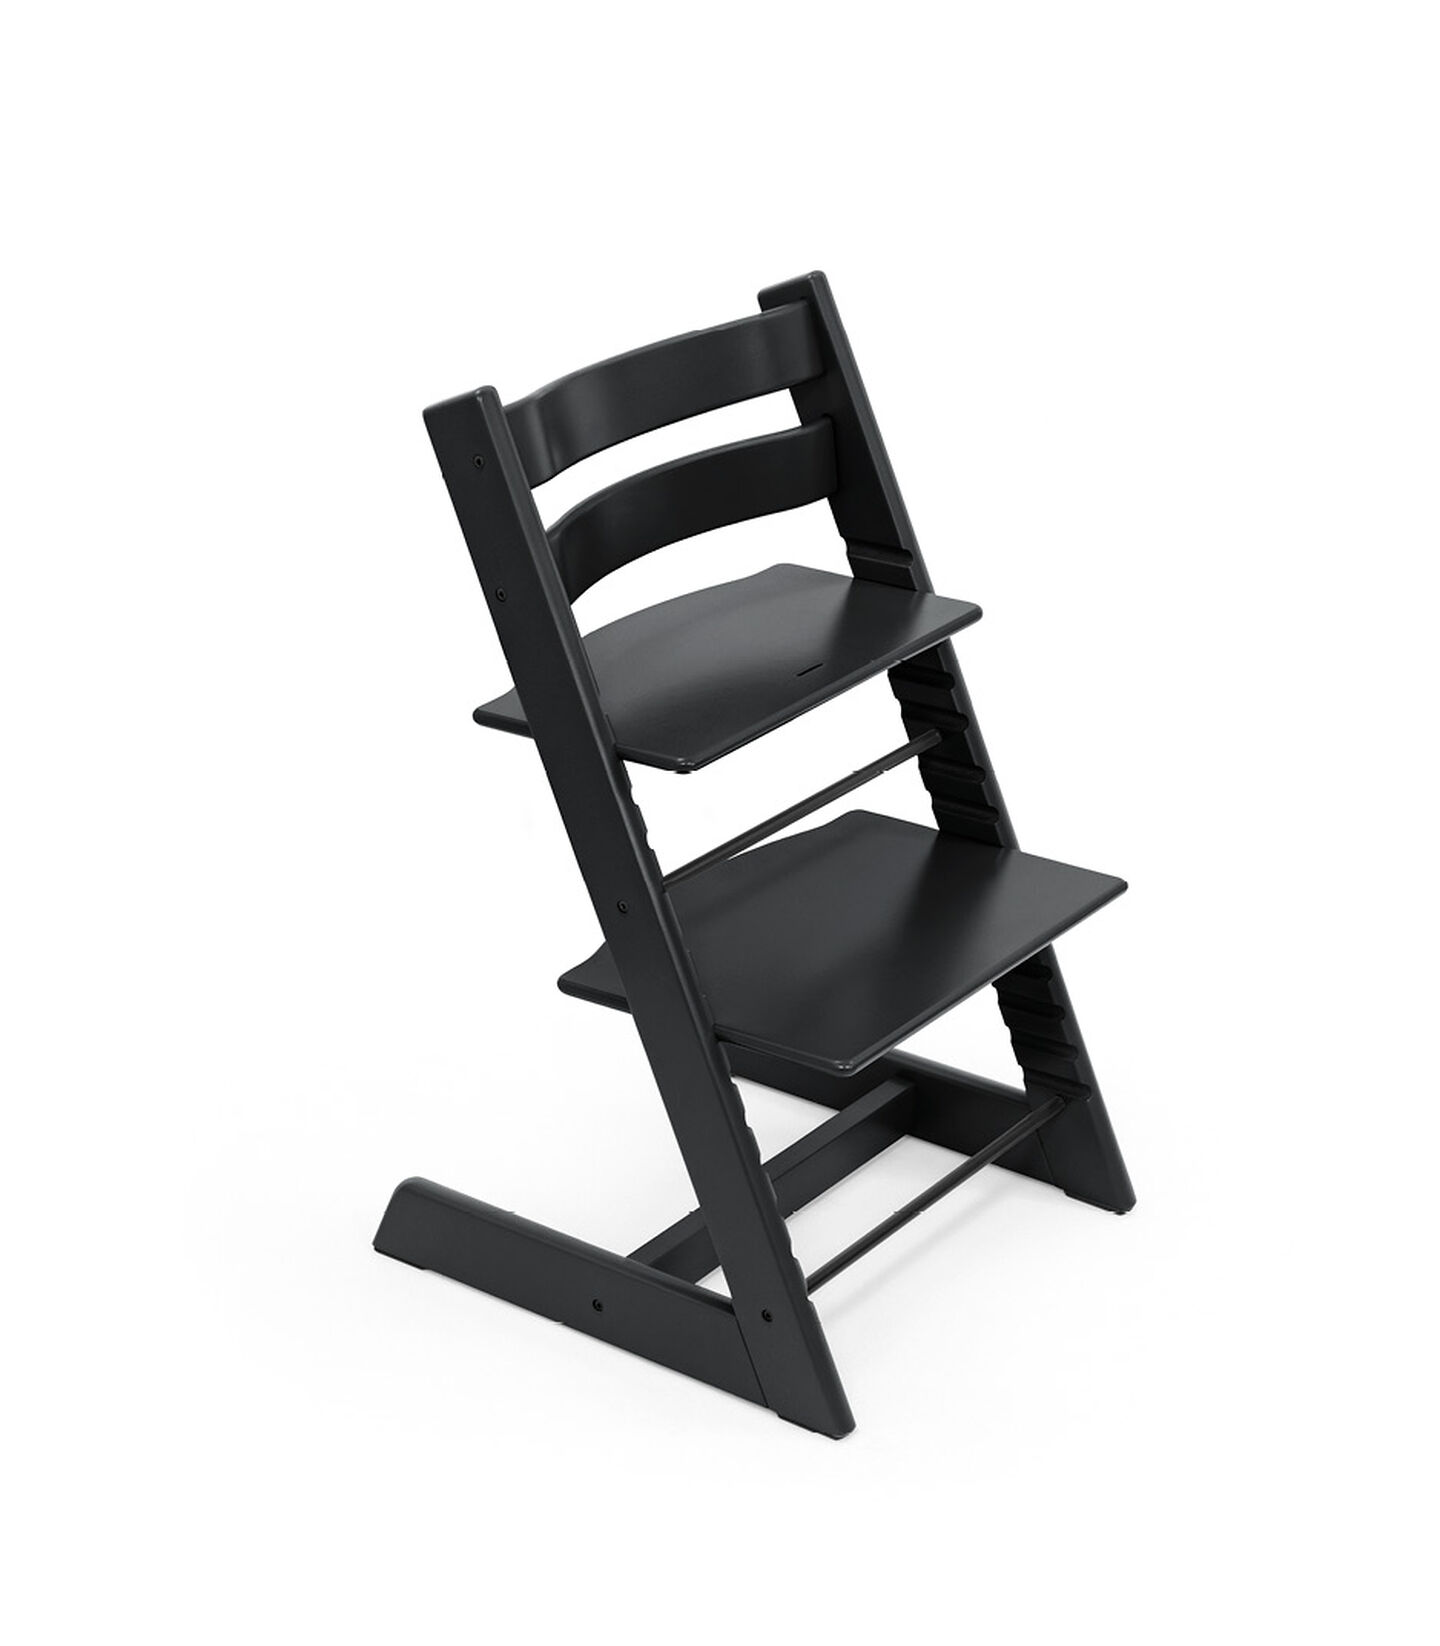 Tripp Trapp® Chair Black, Black, mainview view 1